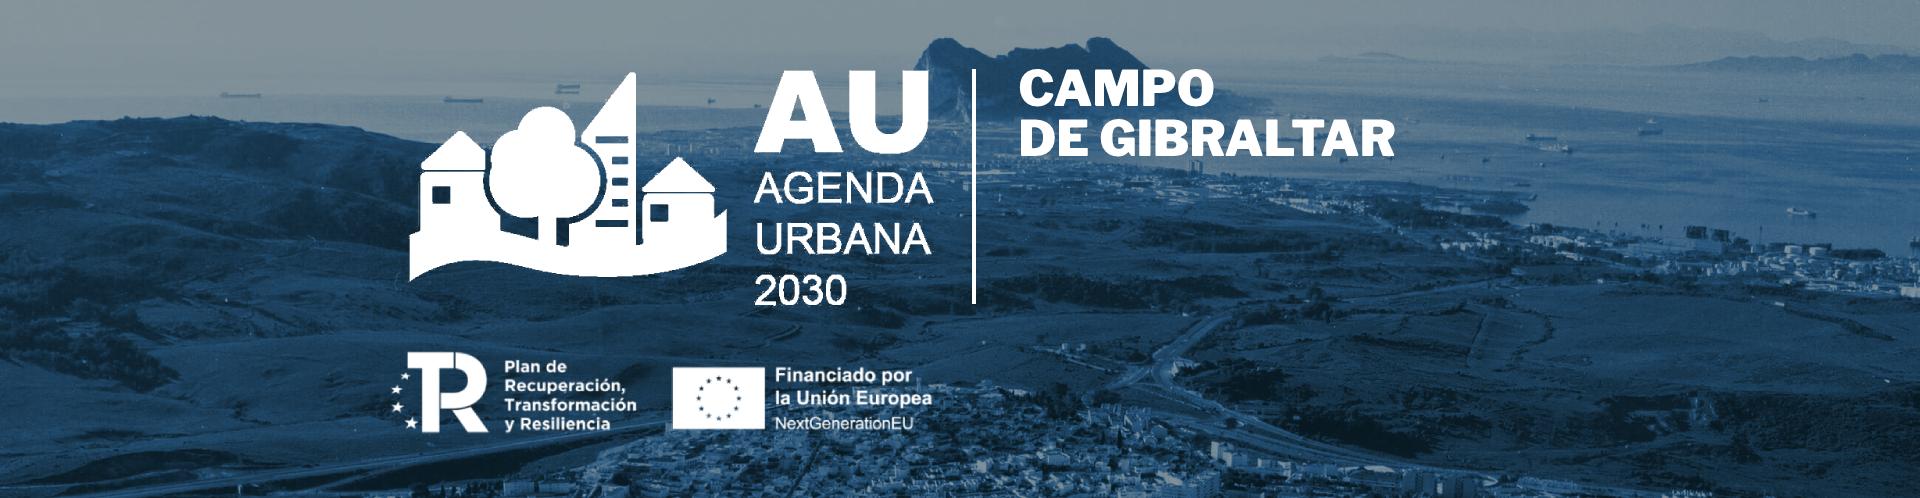 Agenda Urbana 2030 Campo de Gibraltar